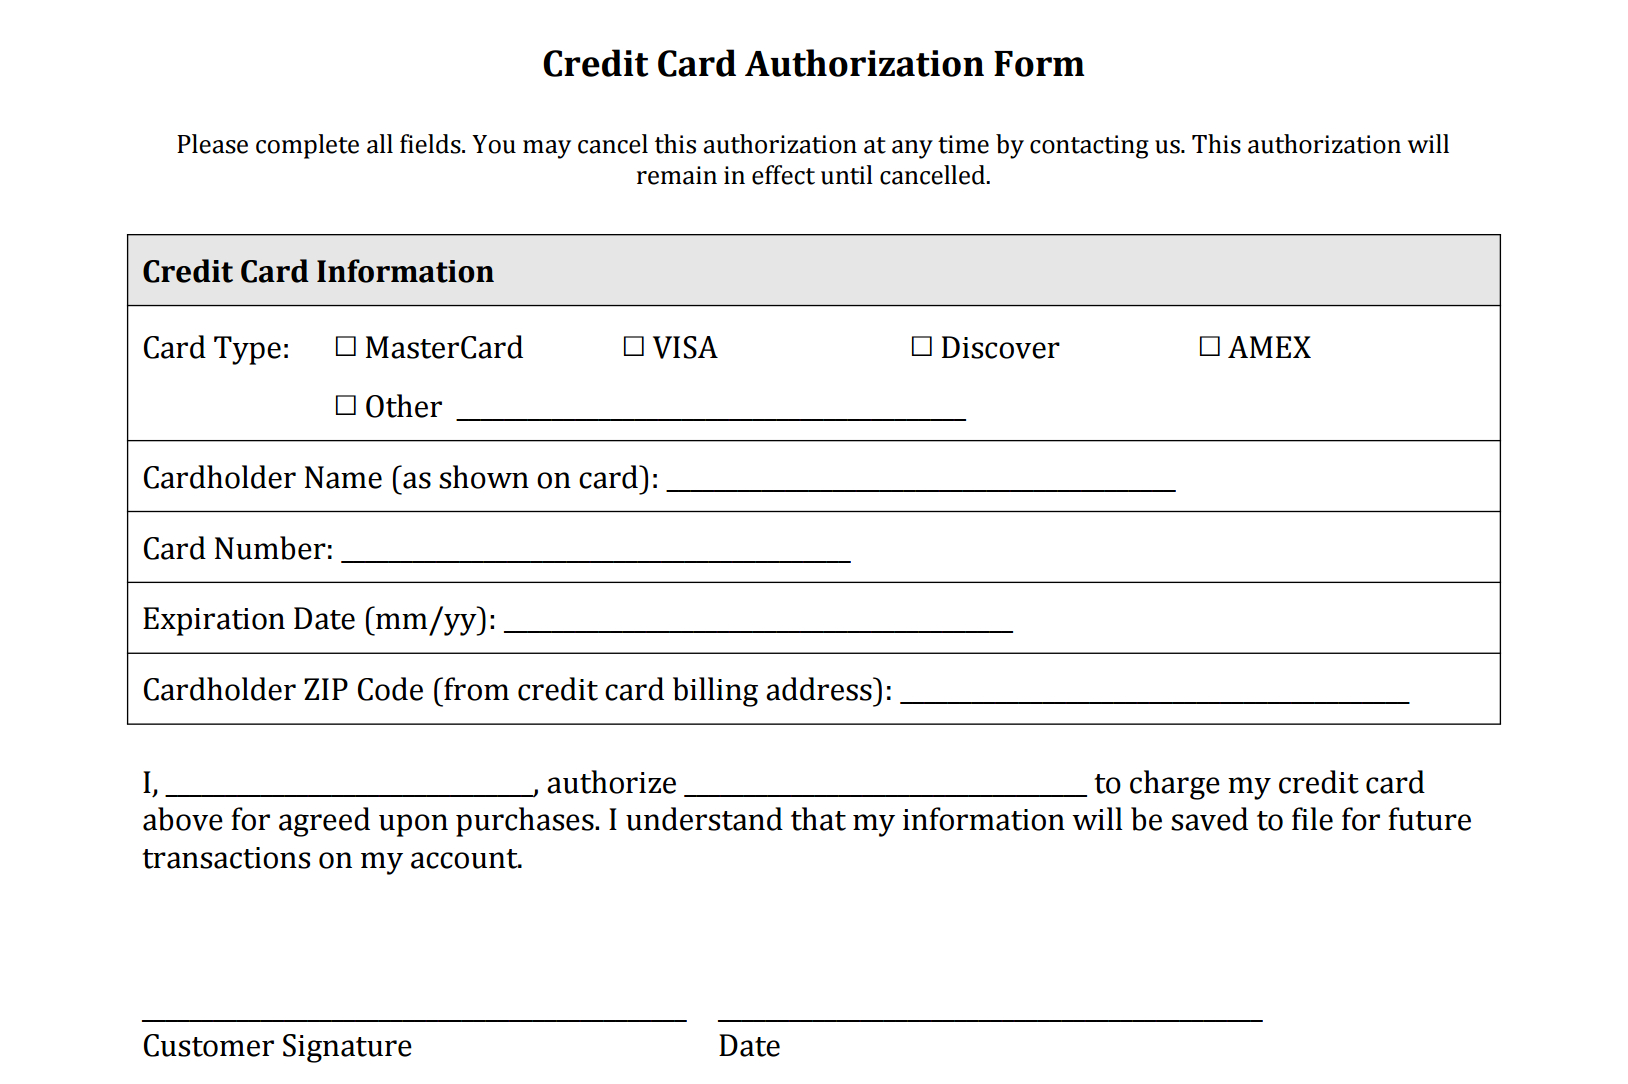 Credit Card Authorisation Form Template Australia - Milas With Credit Card Authorisation Form Template Australia